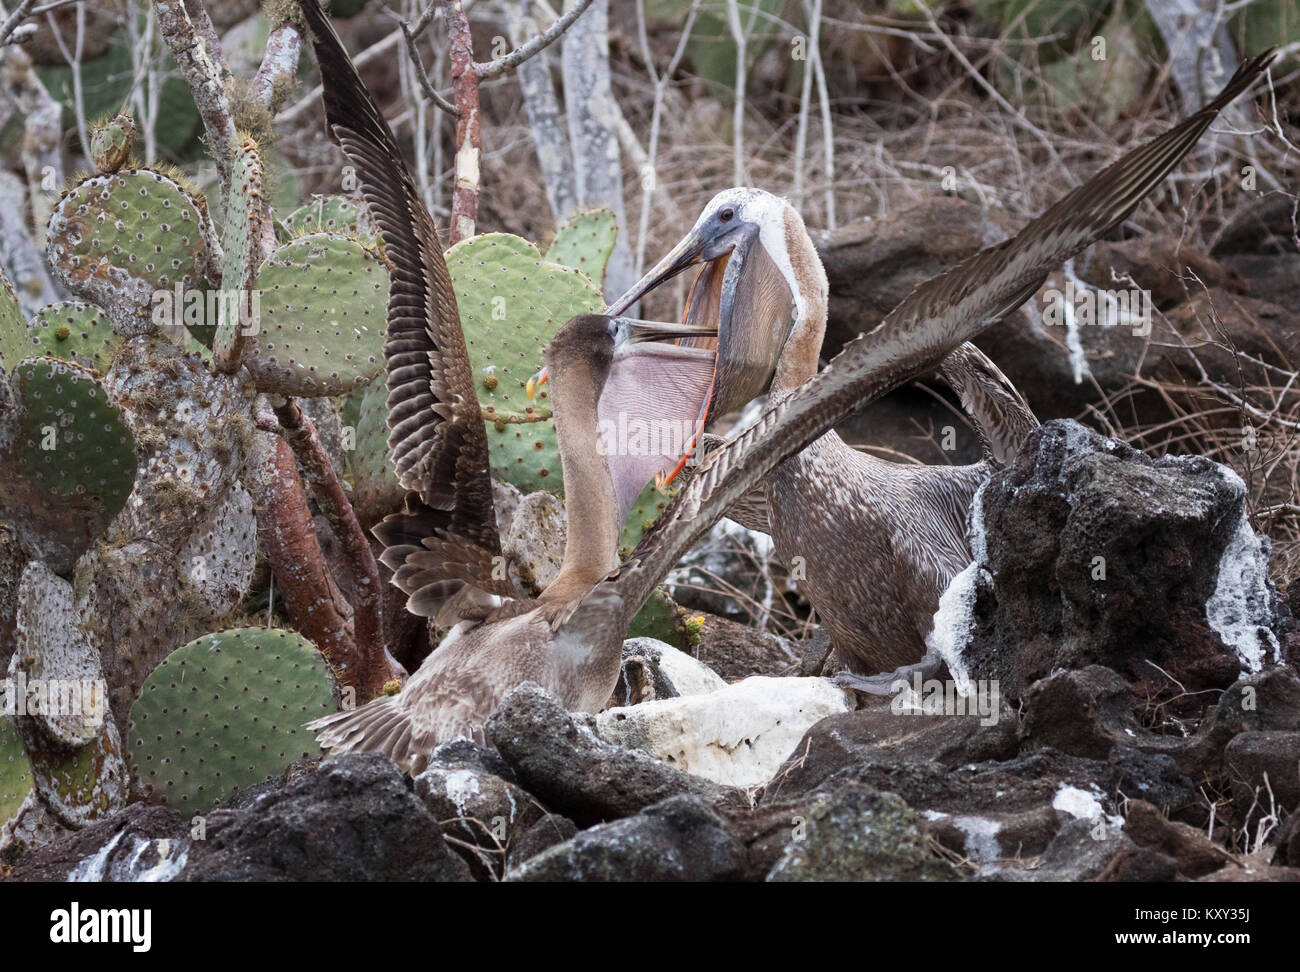 Braunpelikan (Pelecanus occidentalis), nach Fütterung junger auf Nest, Rabida Island, Galapagos Inseln Ecuador Südamerika Stockfoto